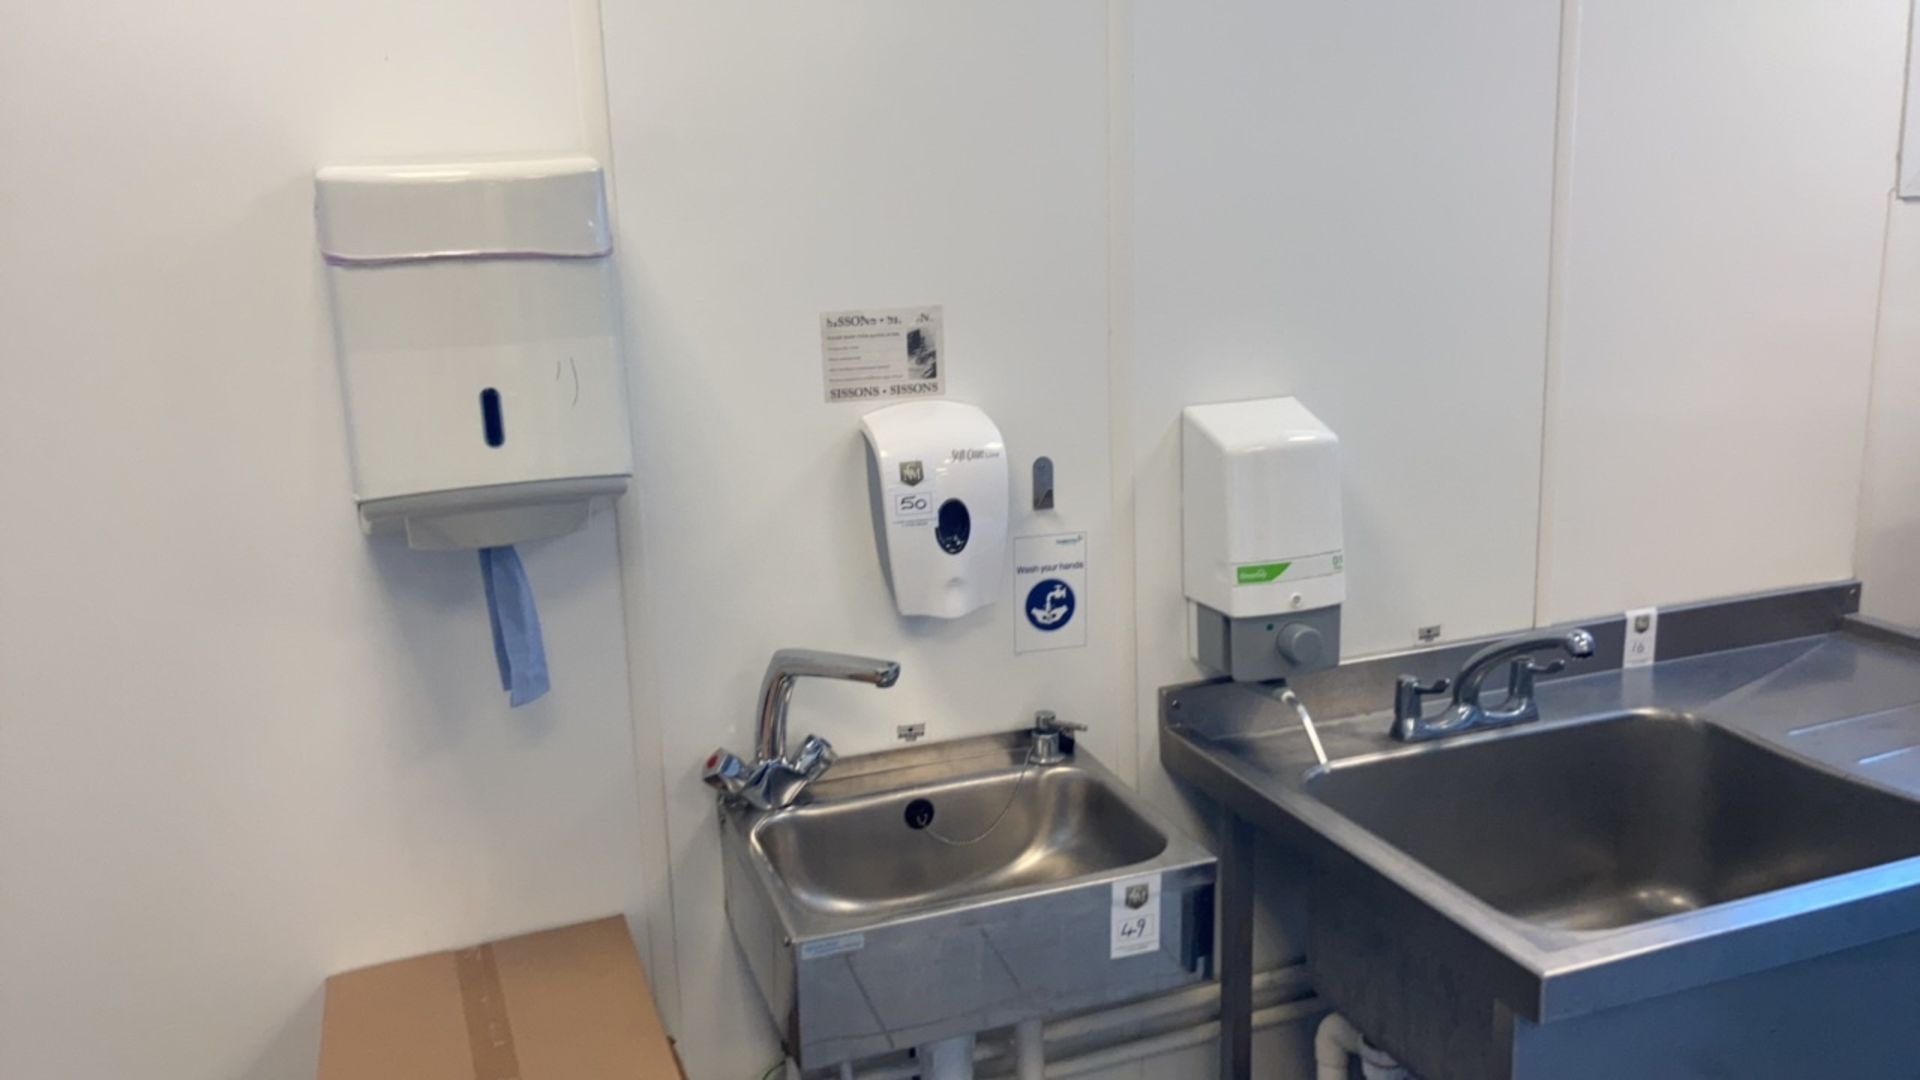 Hand wash station - Image 2 of 2